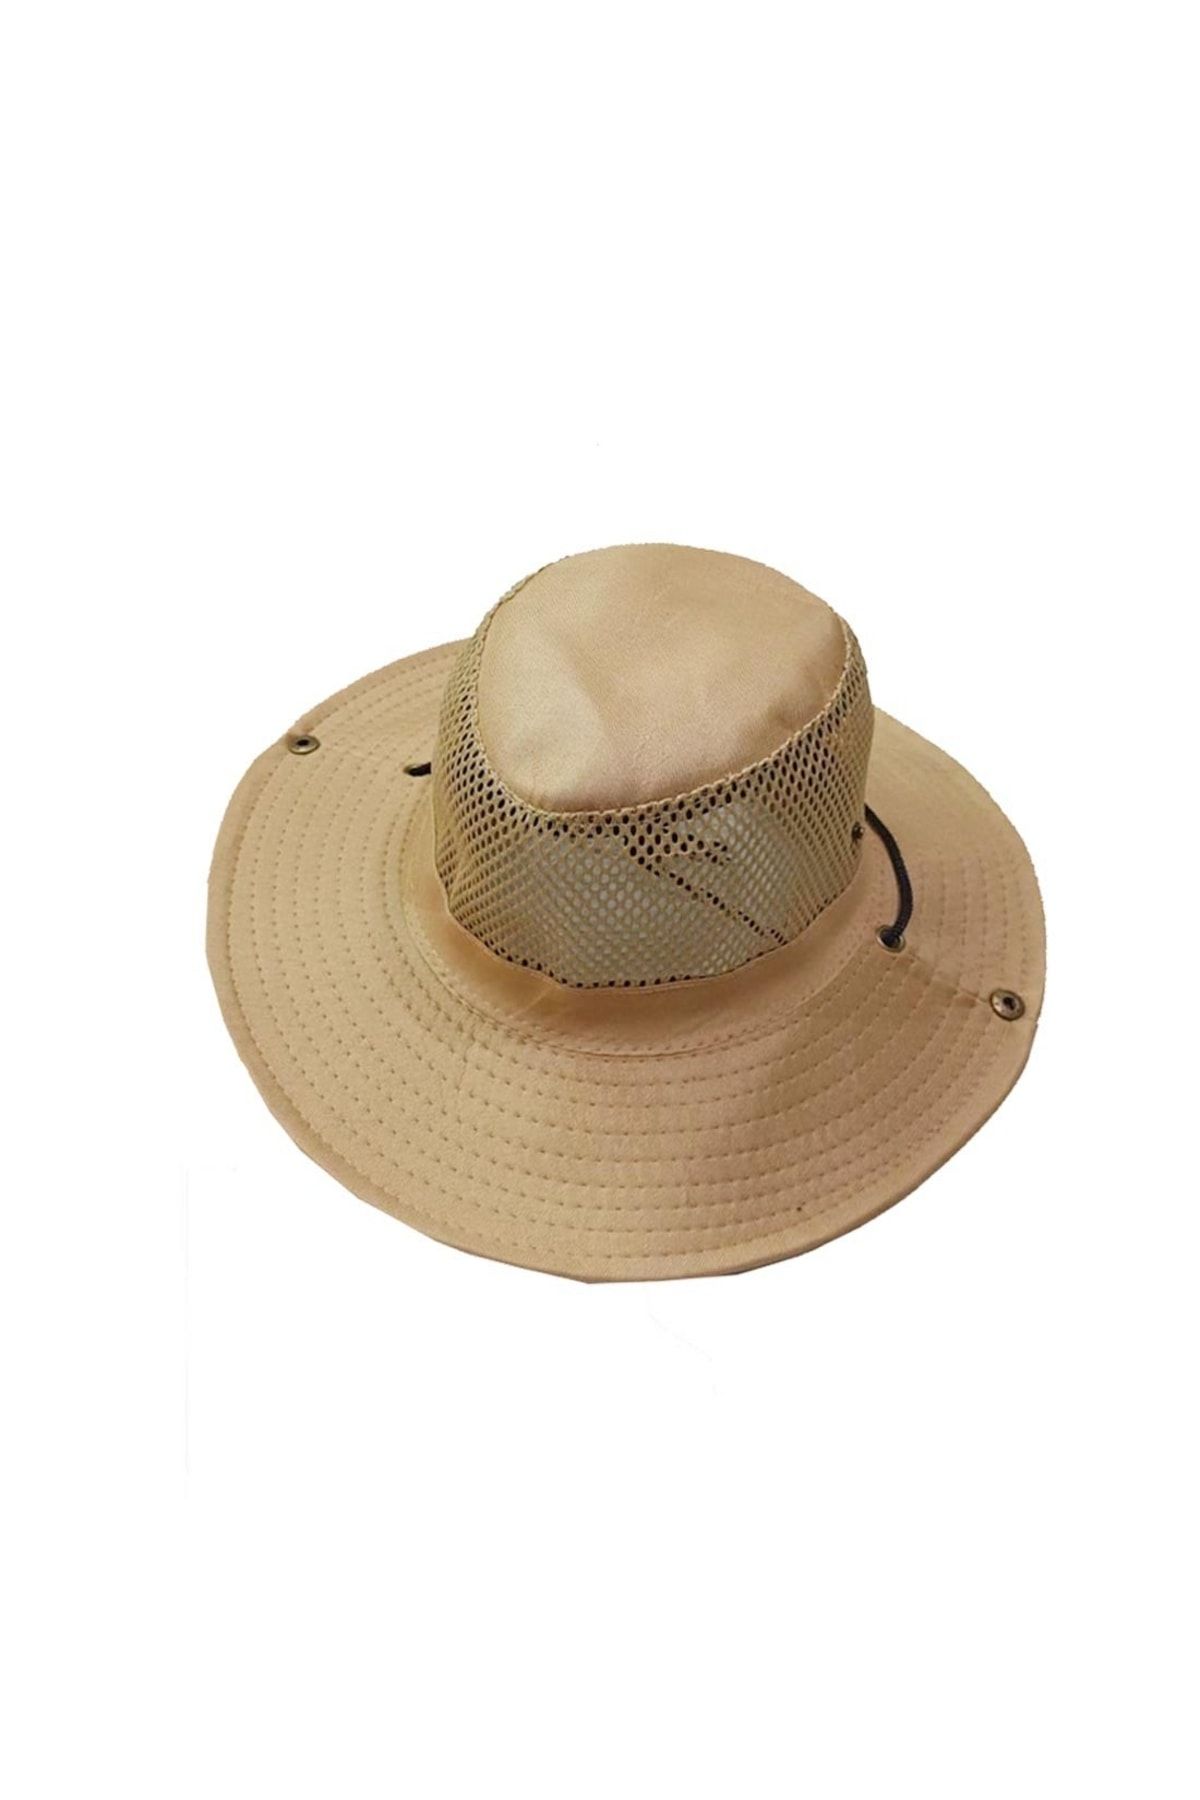 AskerVadisi Jungle Fileli Safari Şapka 6 Farklı Renkte